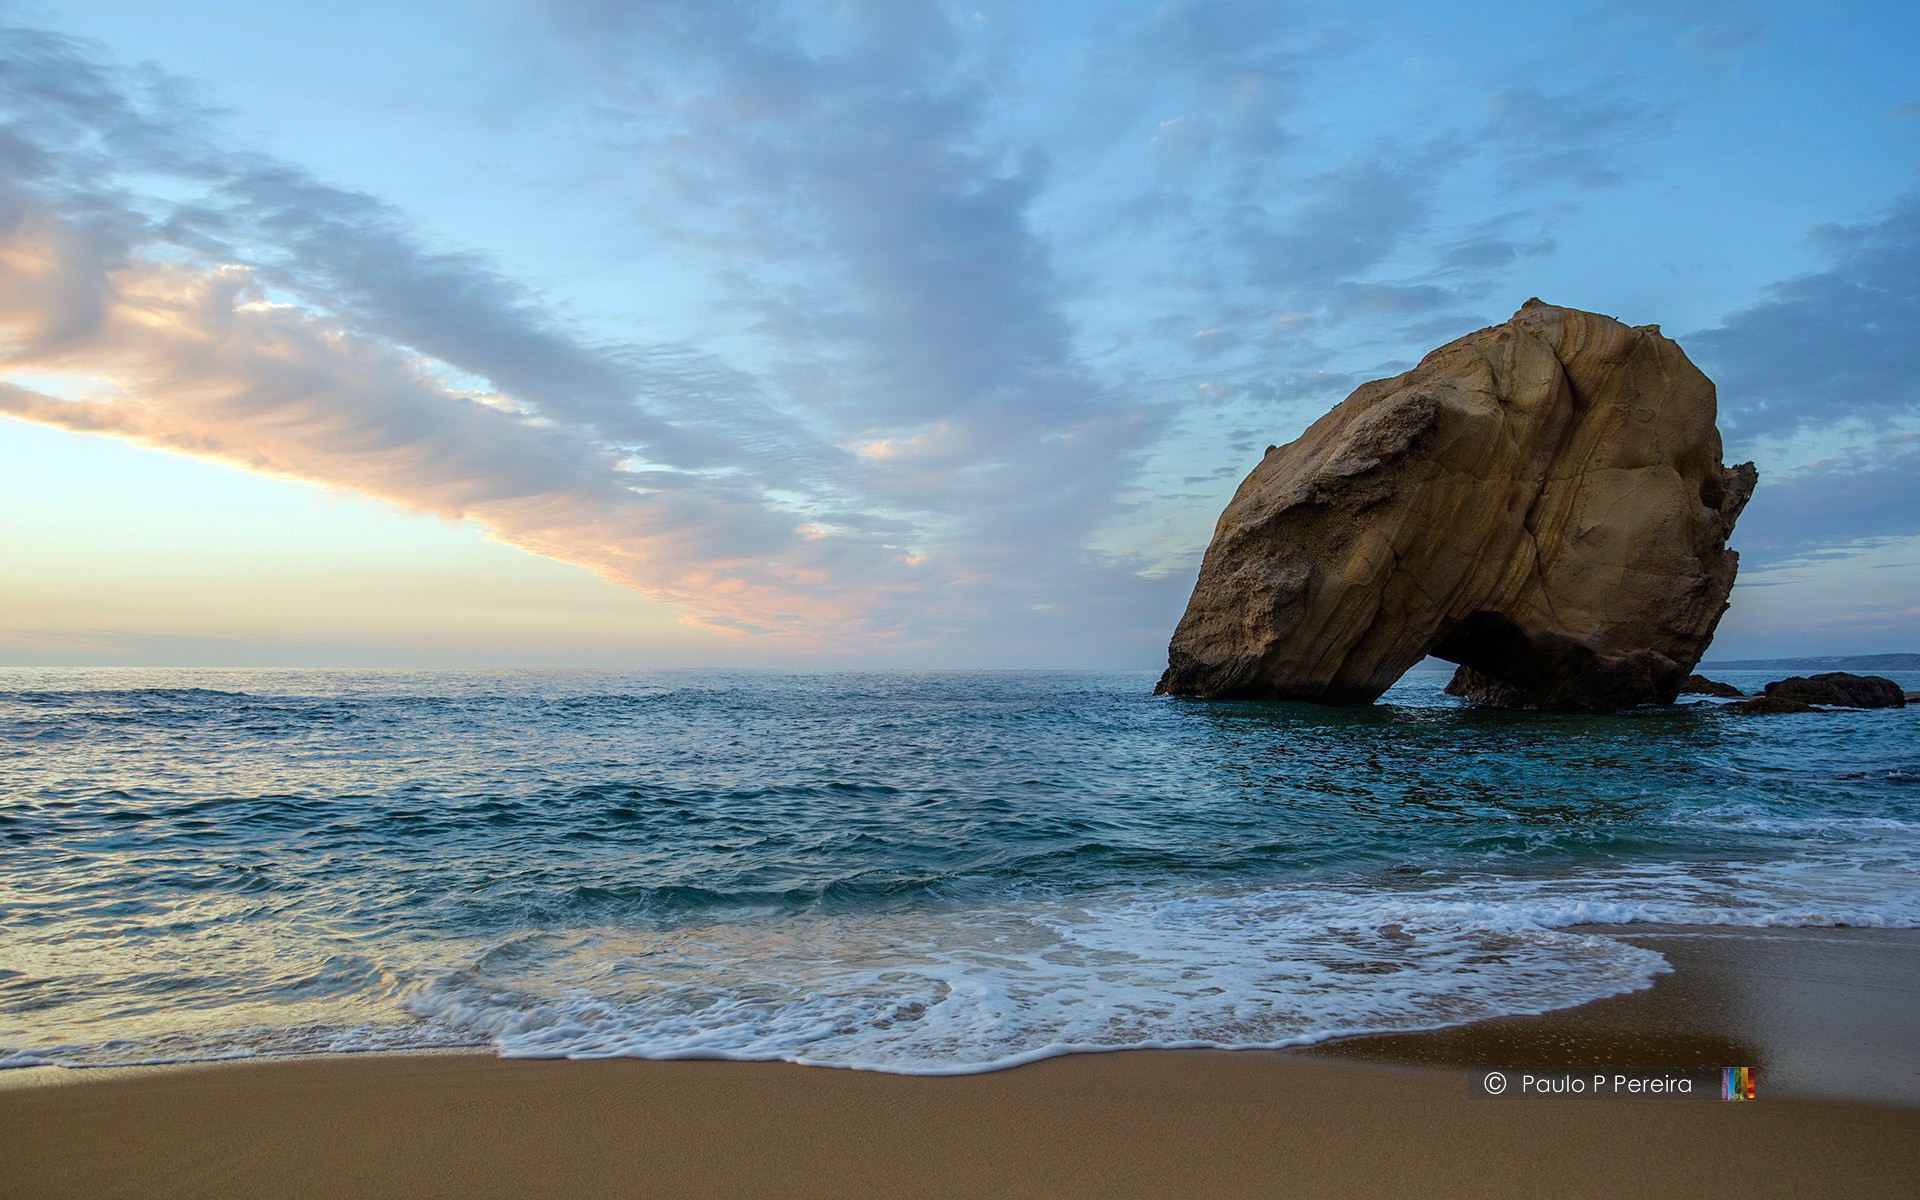 Камень у побережья, Португалия